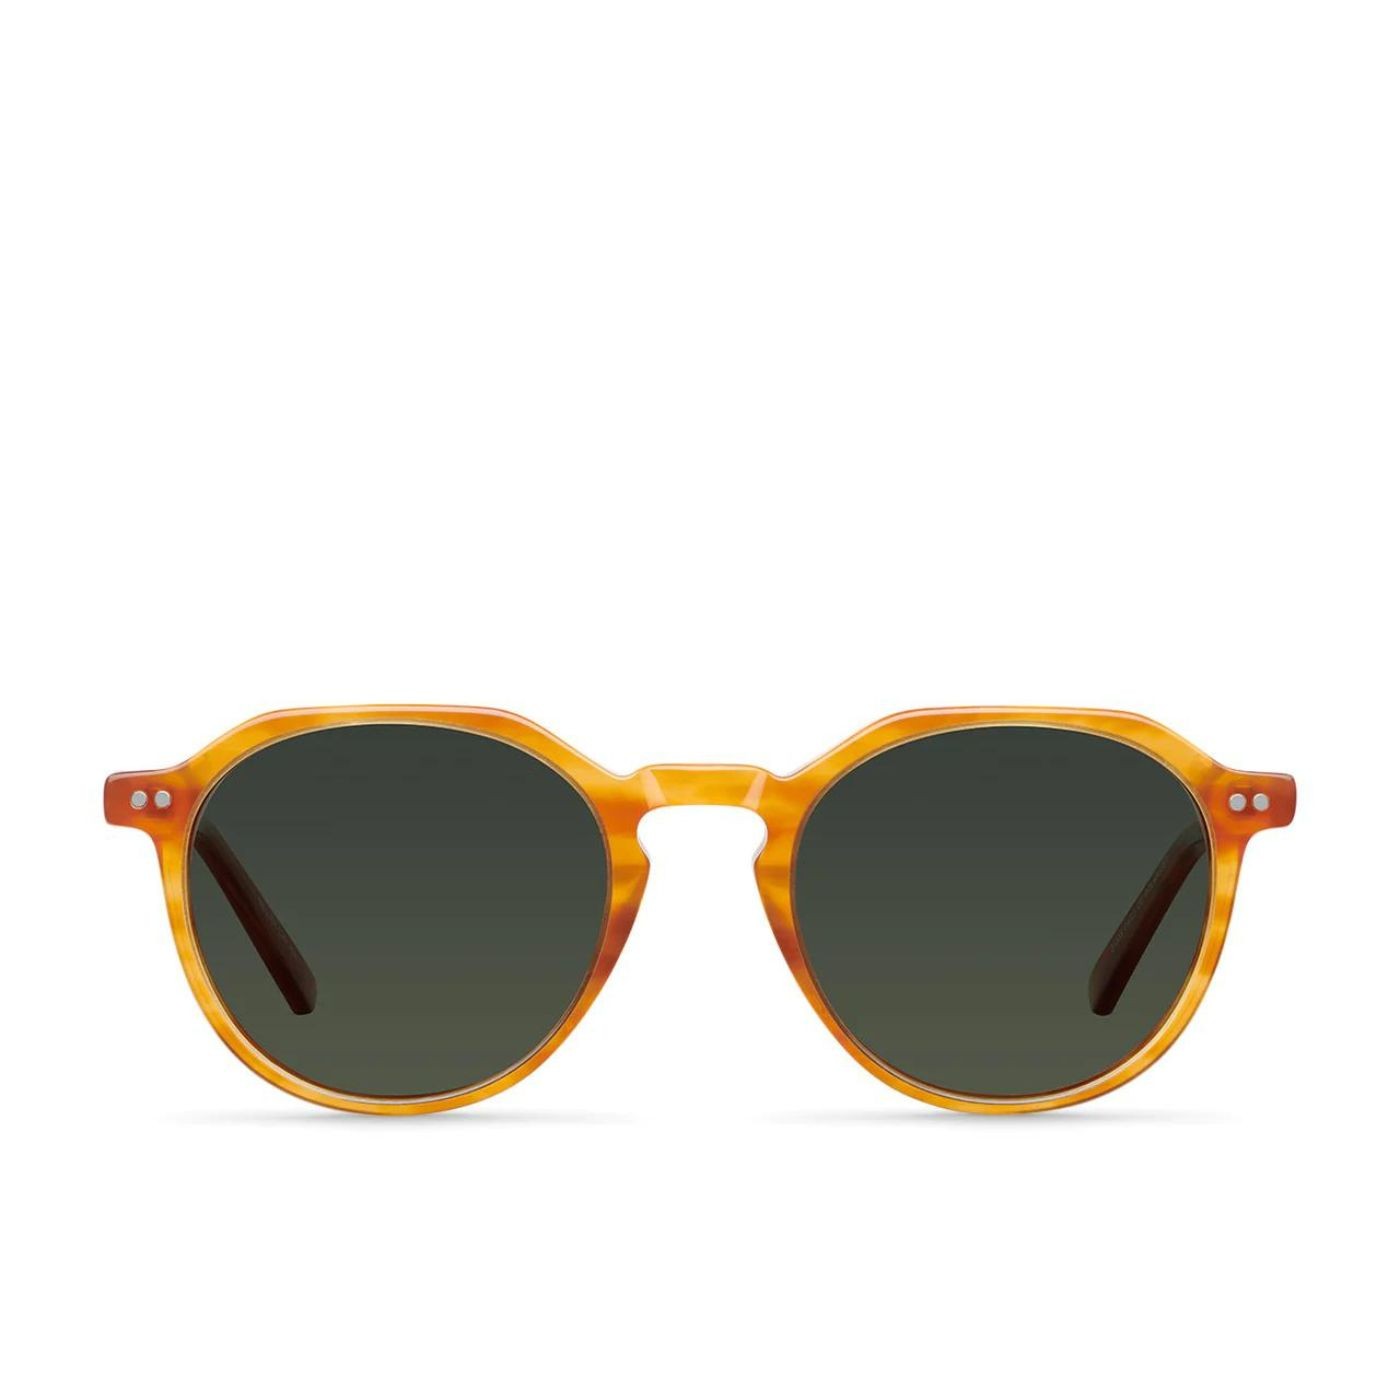 Chauen Orange-Tigris Olive Meller sunglasses